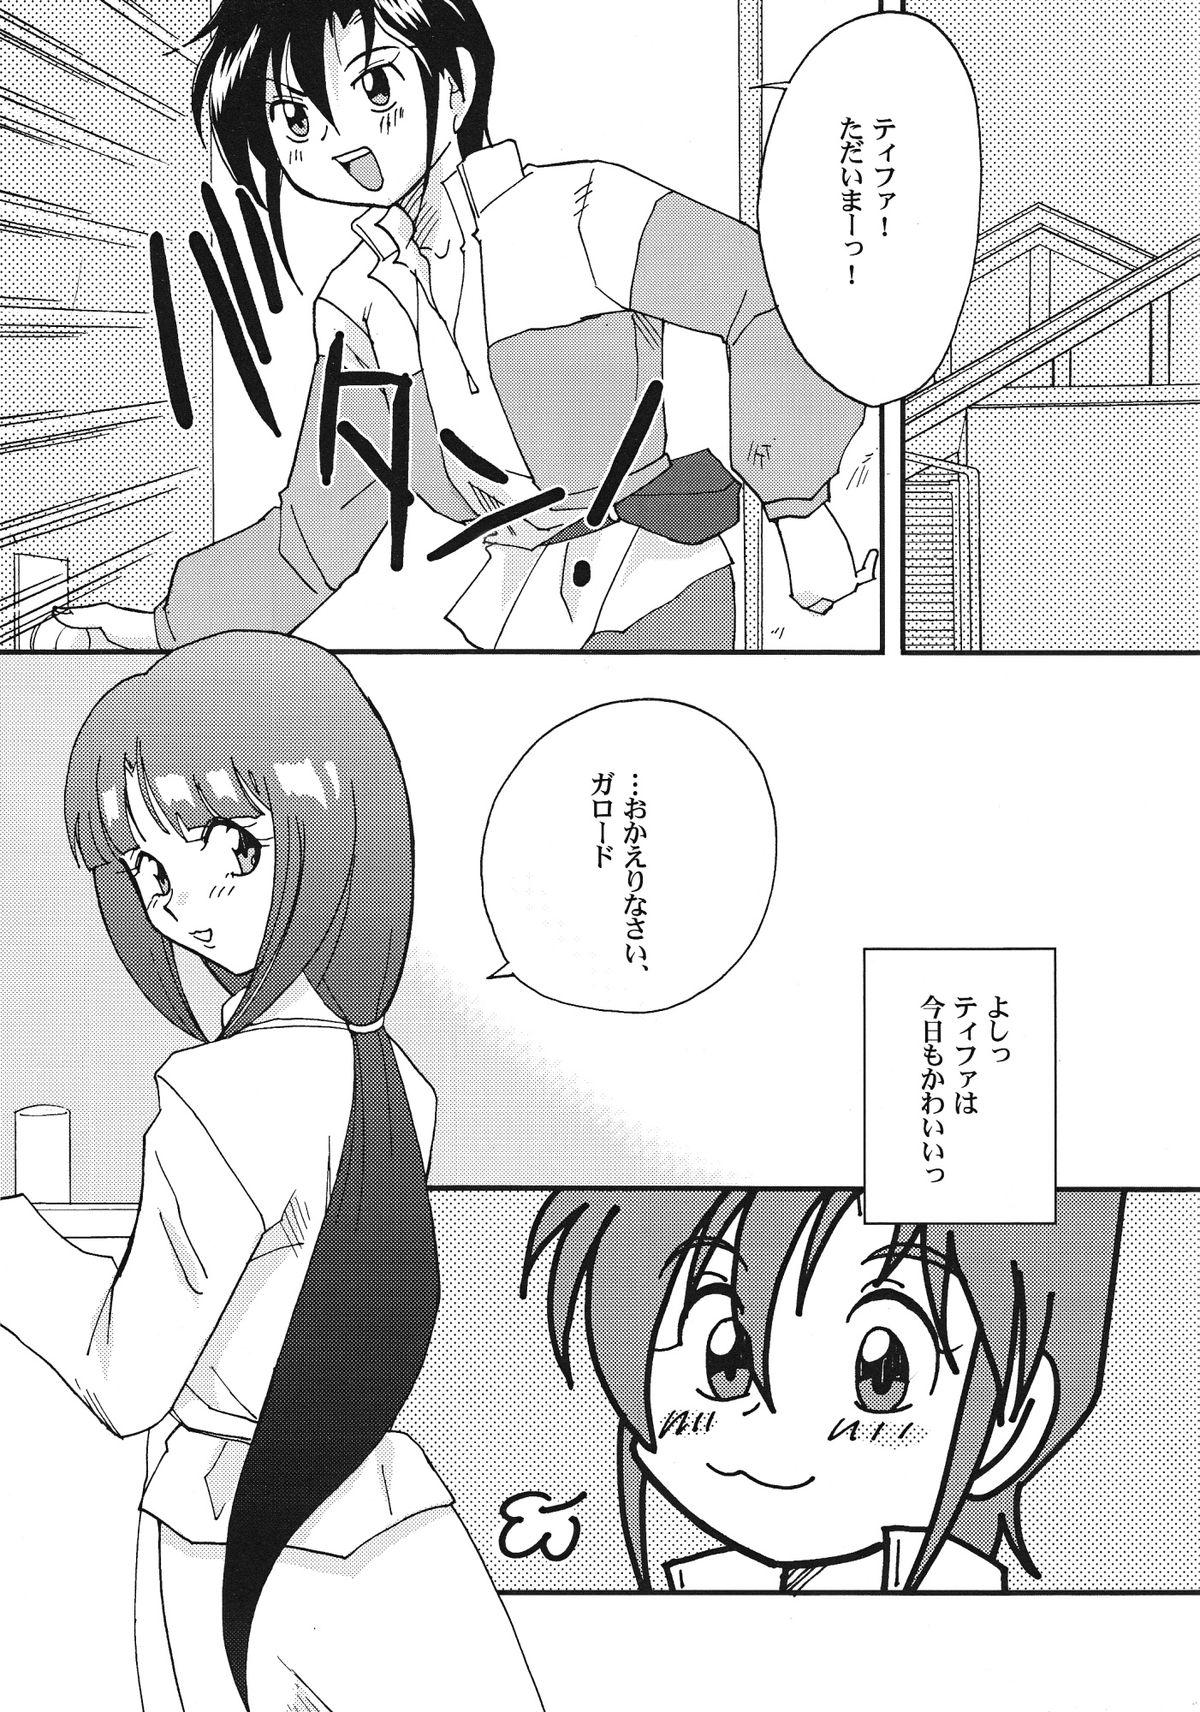 Toy DREAMS - Gundam x Jockstrap - Page 6